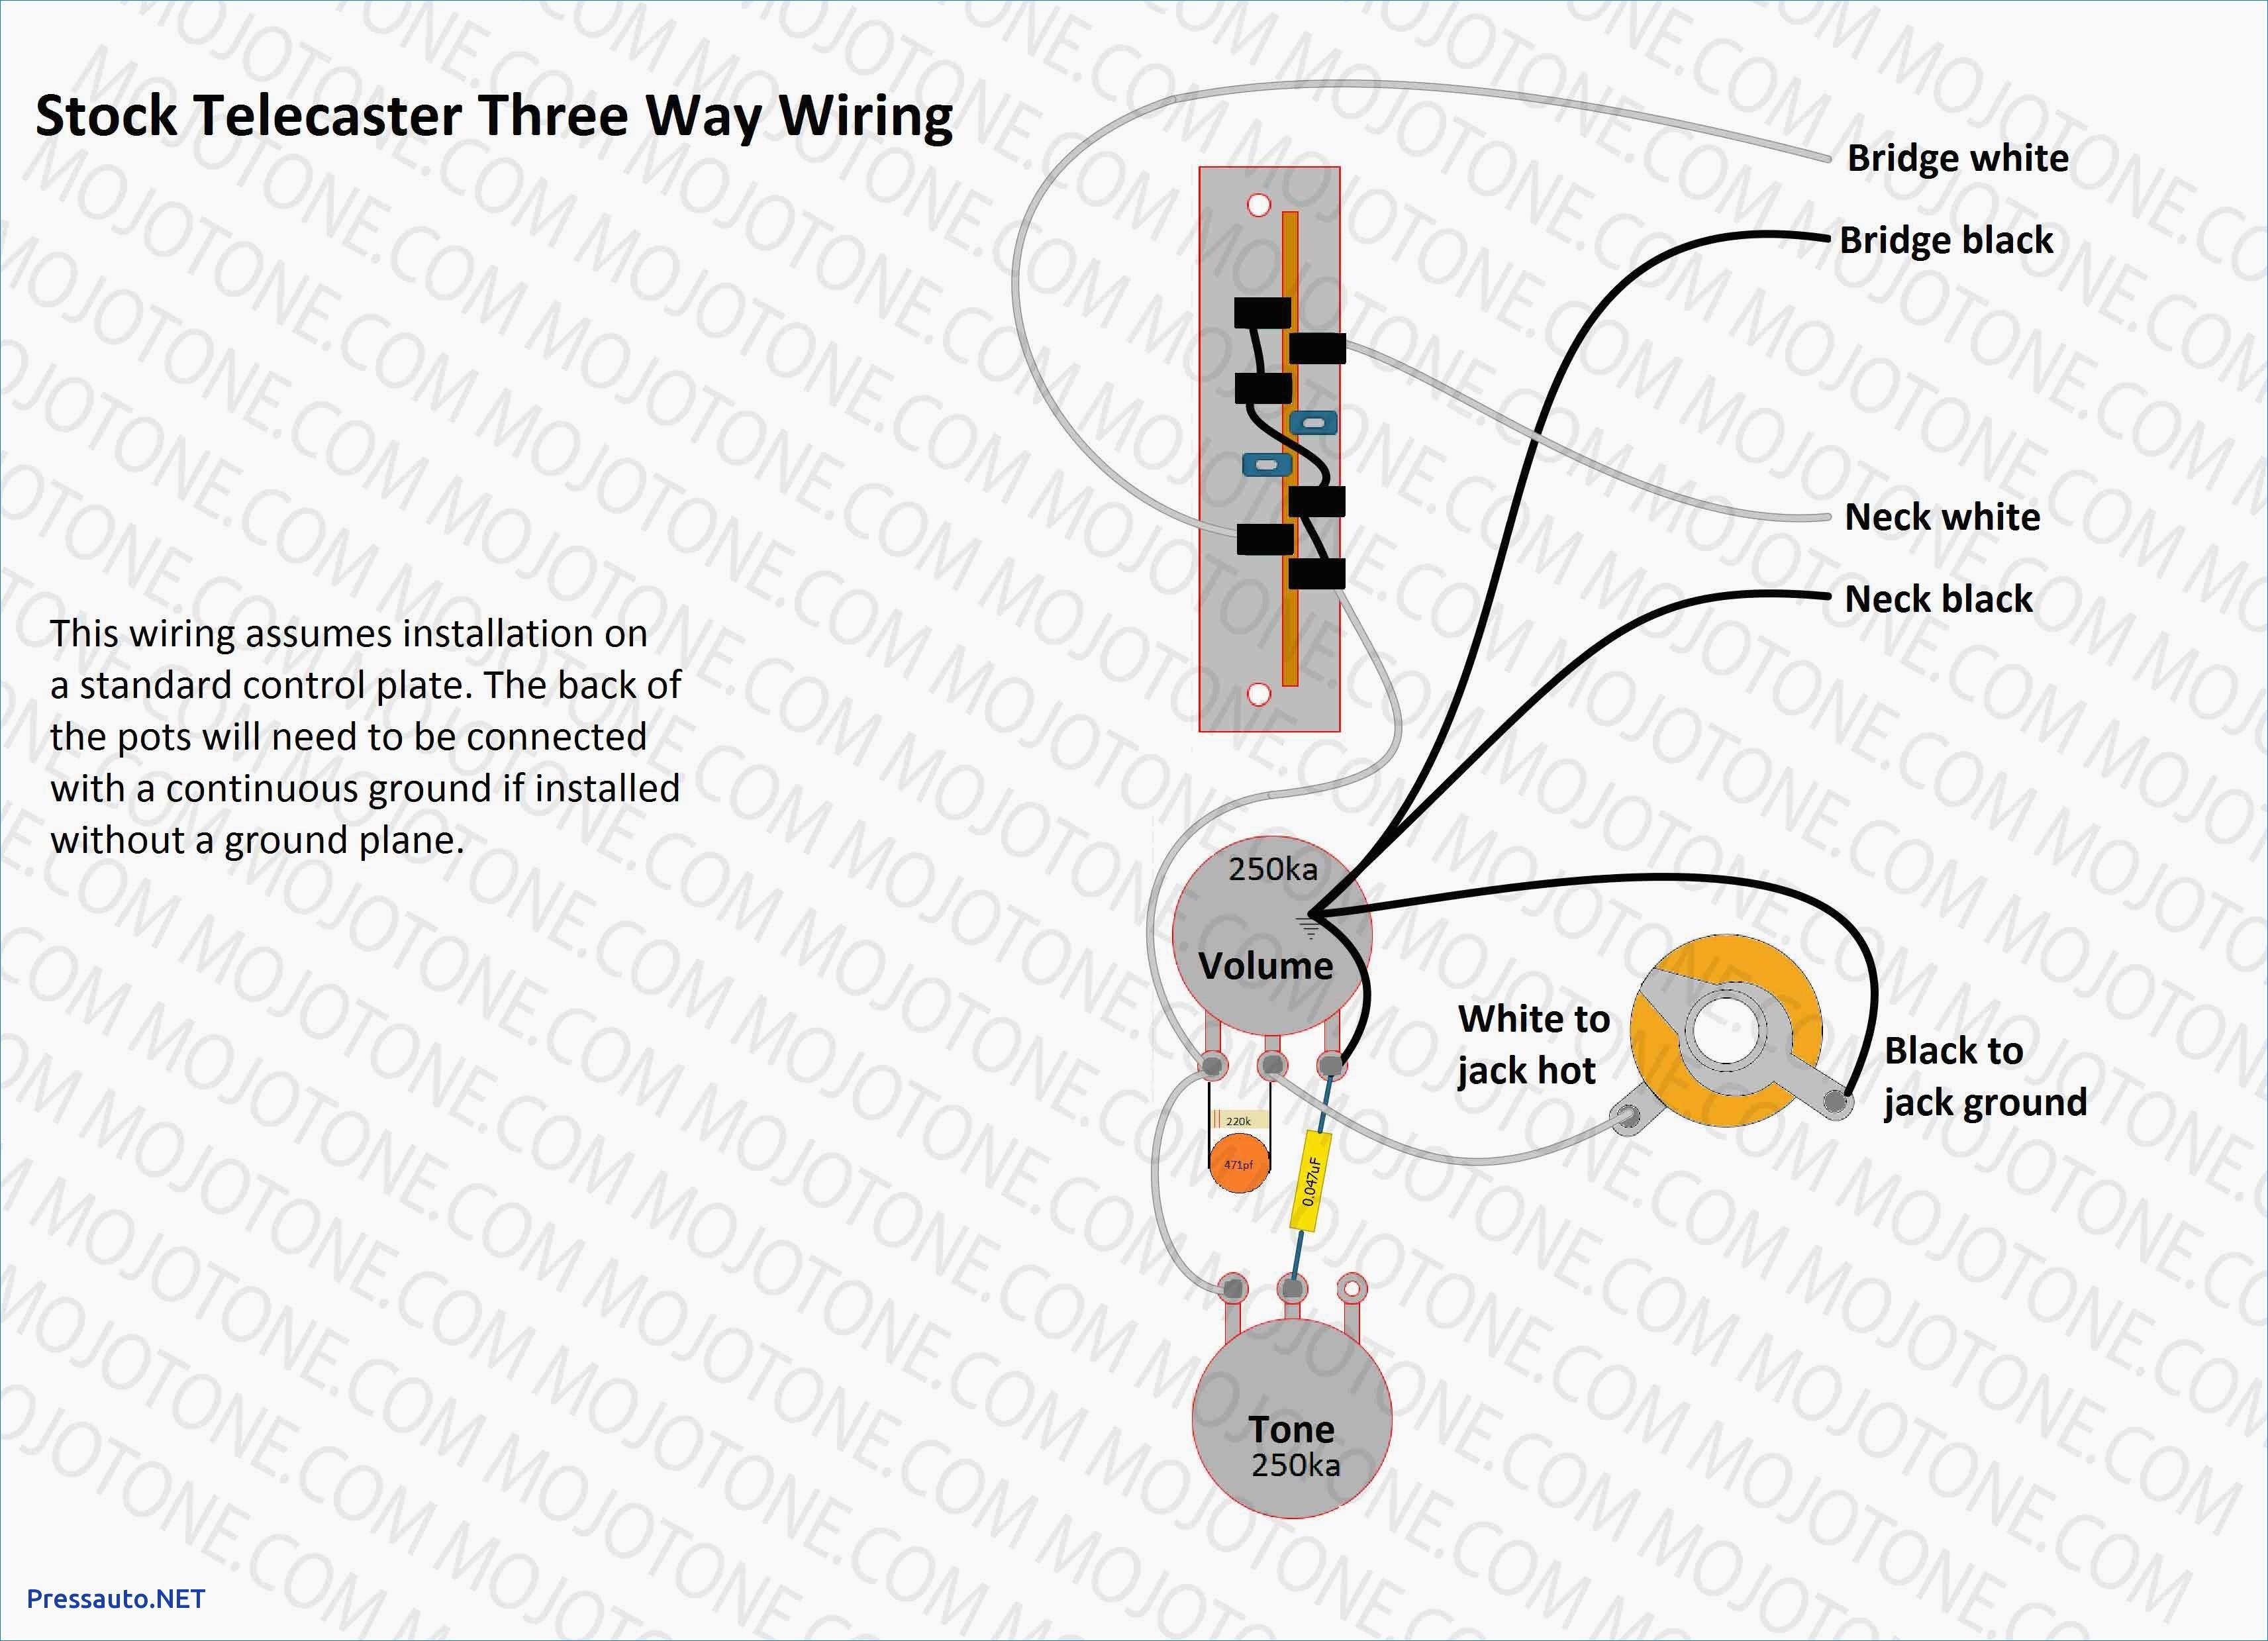 5 Way Switch Wiring Diagram New Wiring Diagram 5 Way Switch Pre Wired Tele Standard 3